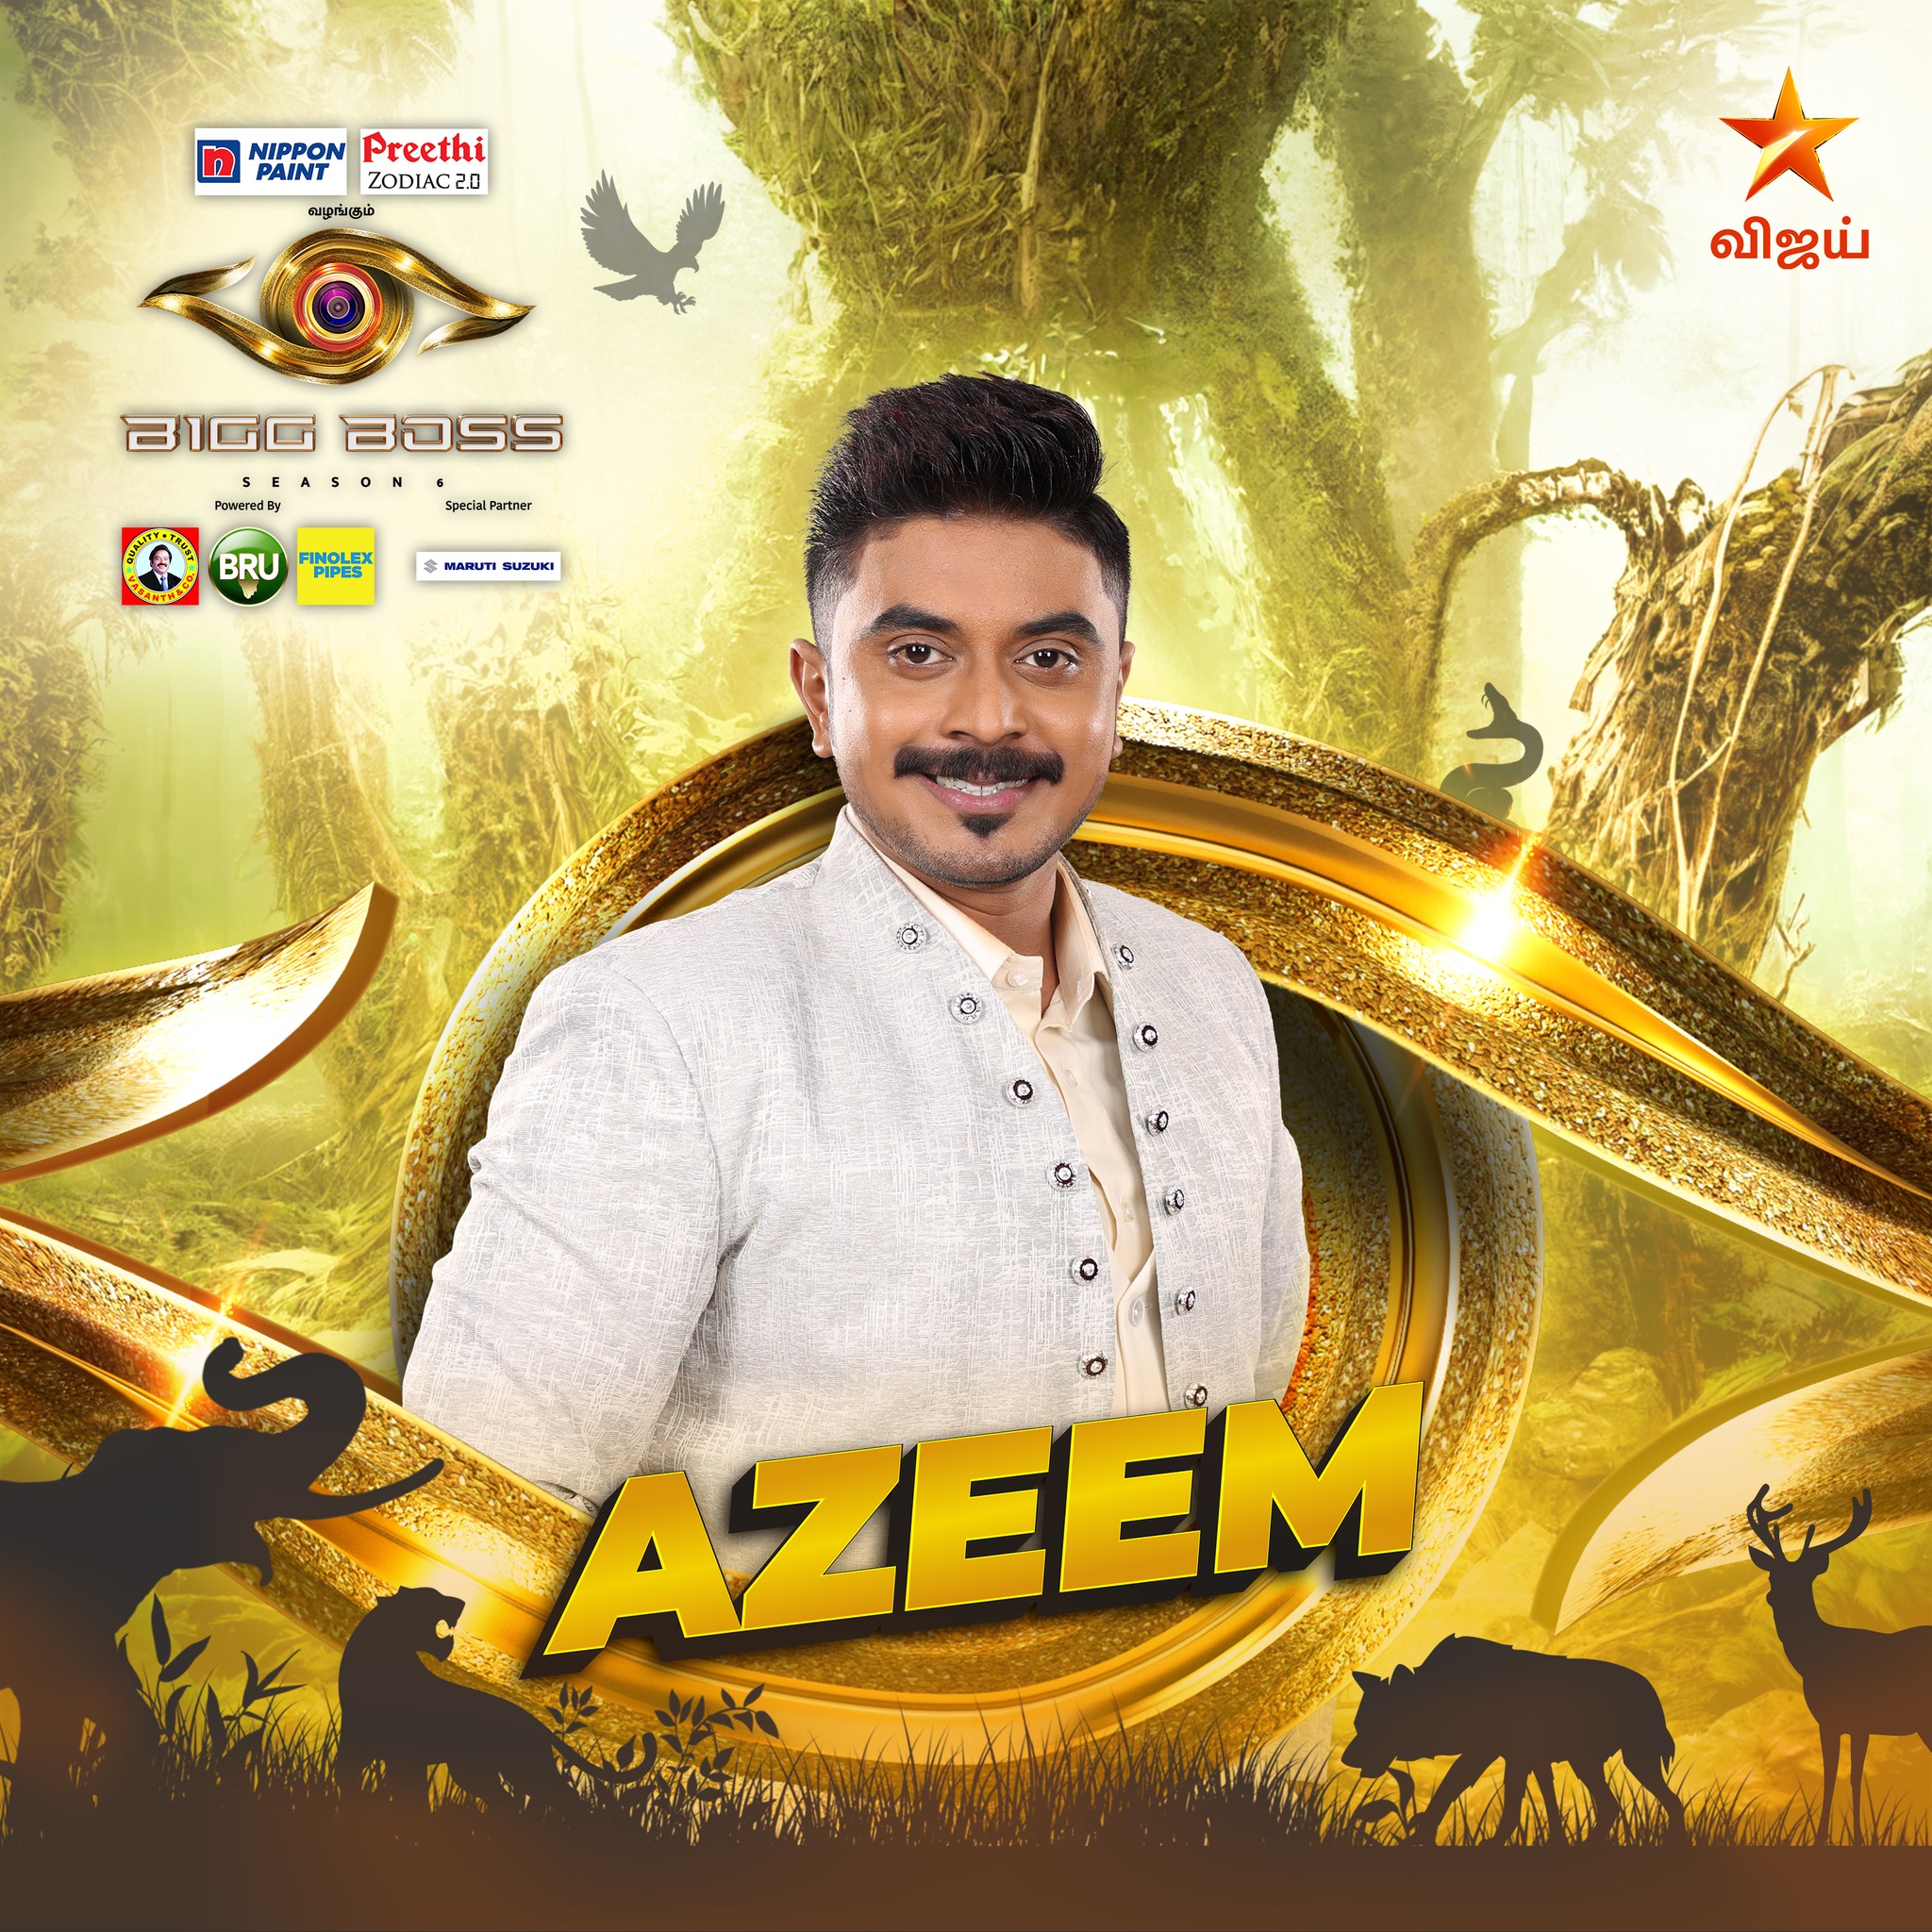 Bigg Boss Tamil contestant season 6 azeem